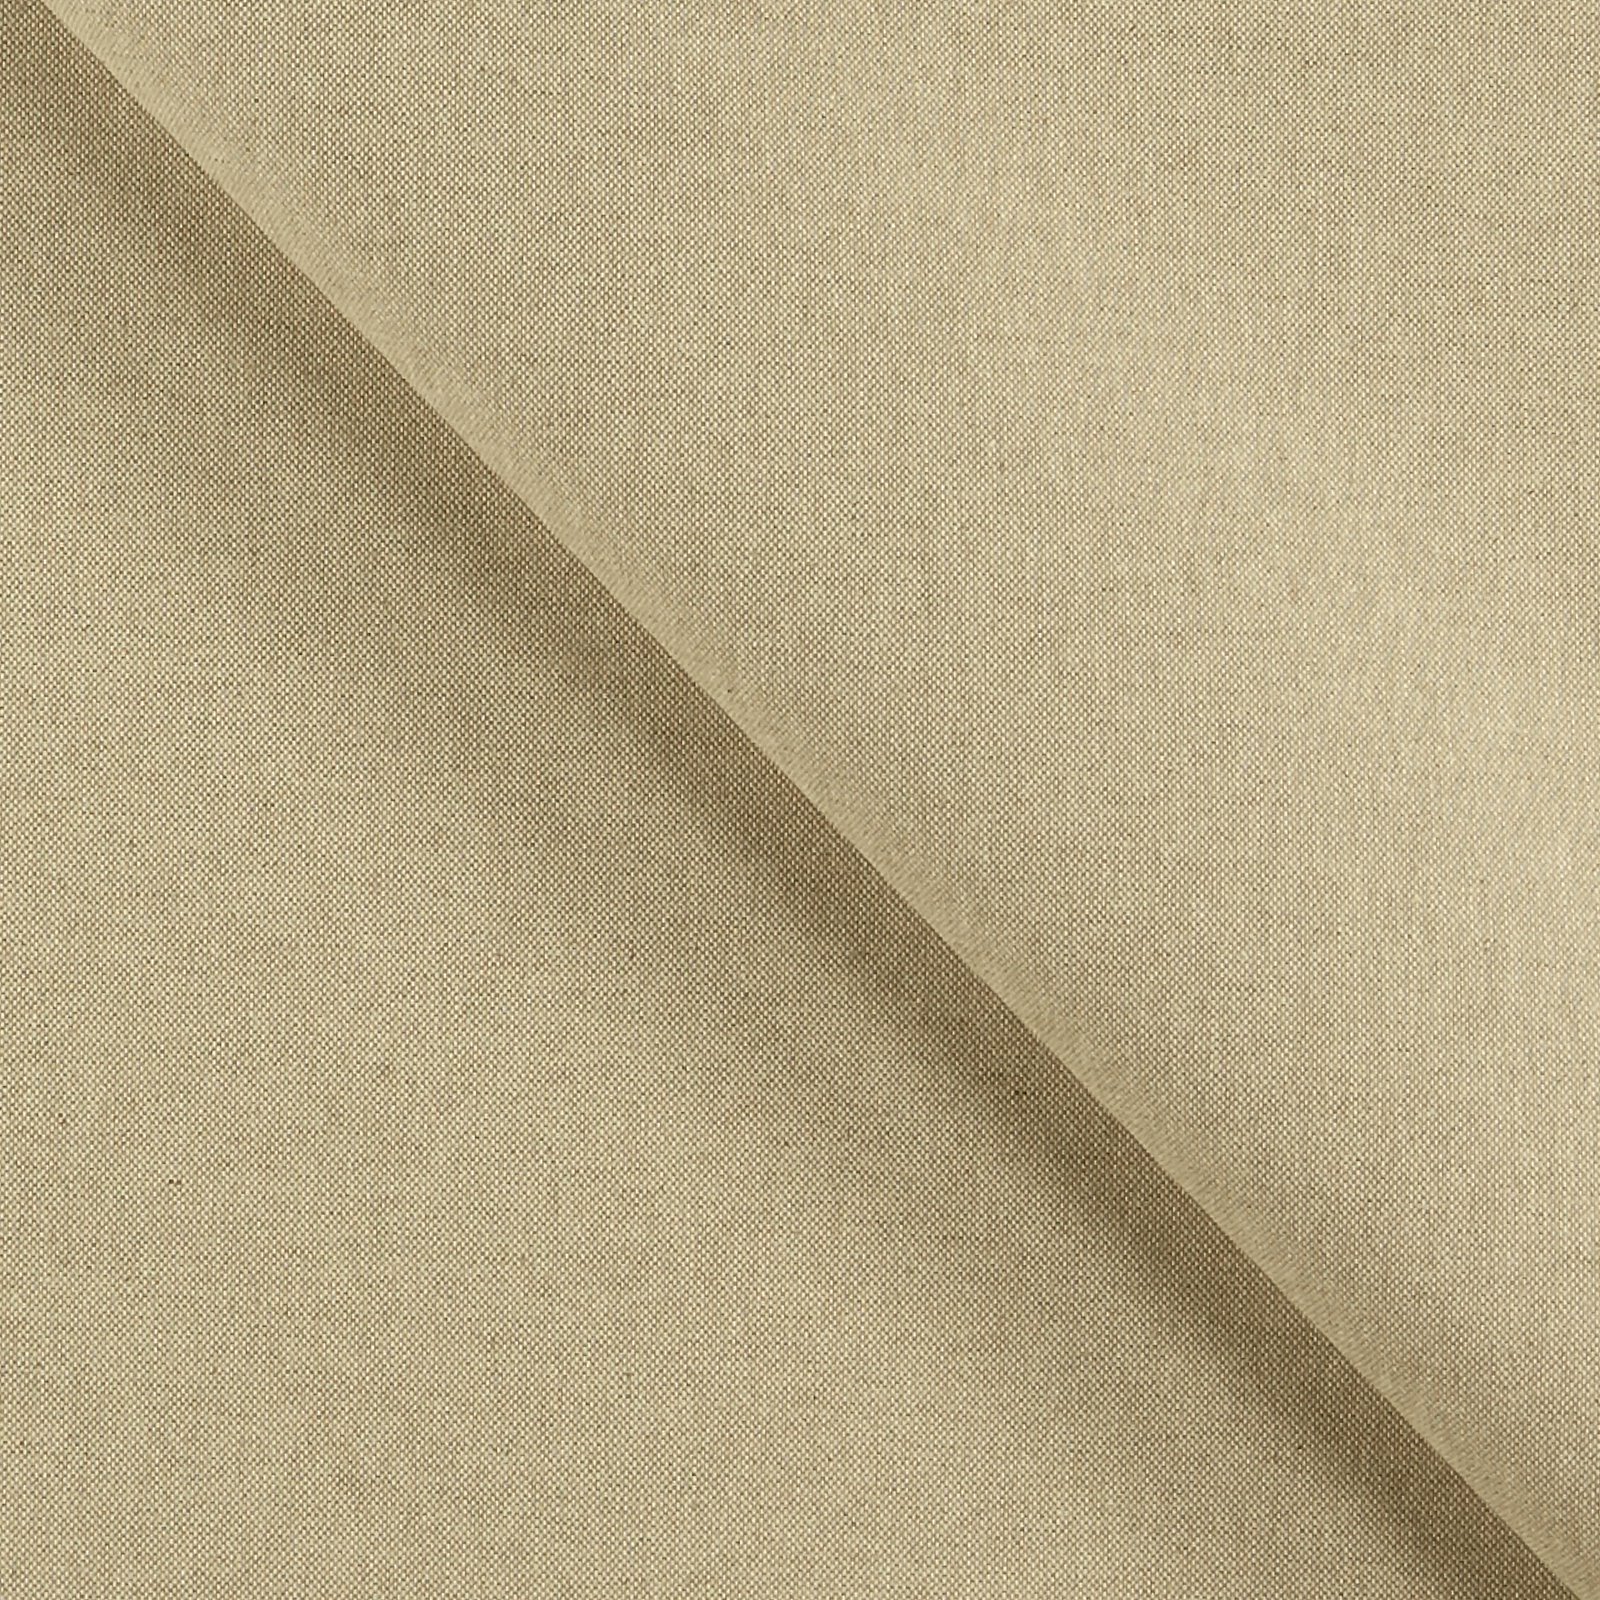 Woven oilcloth linen look 870210_pack